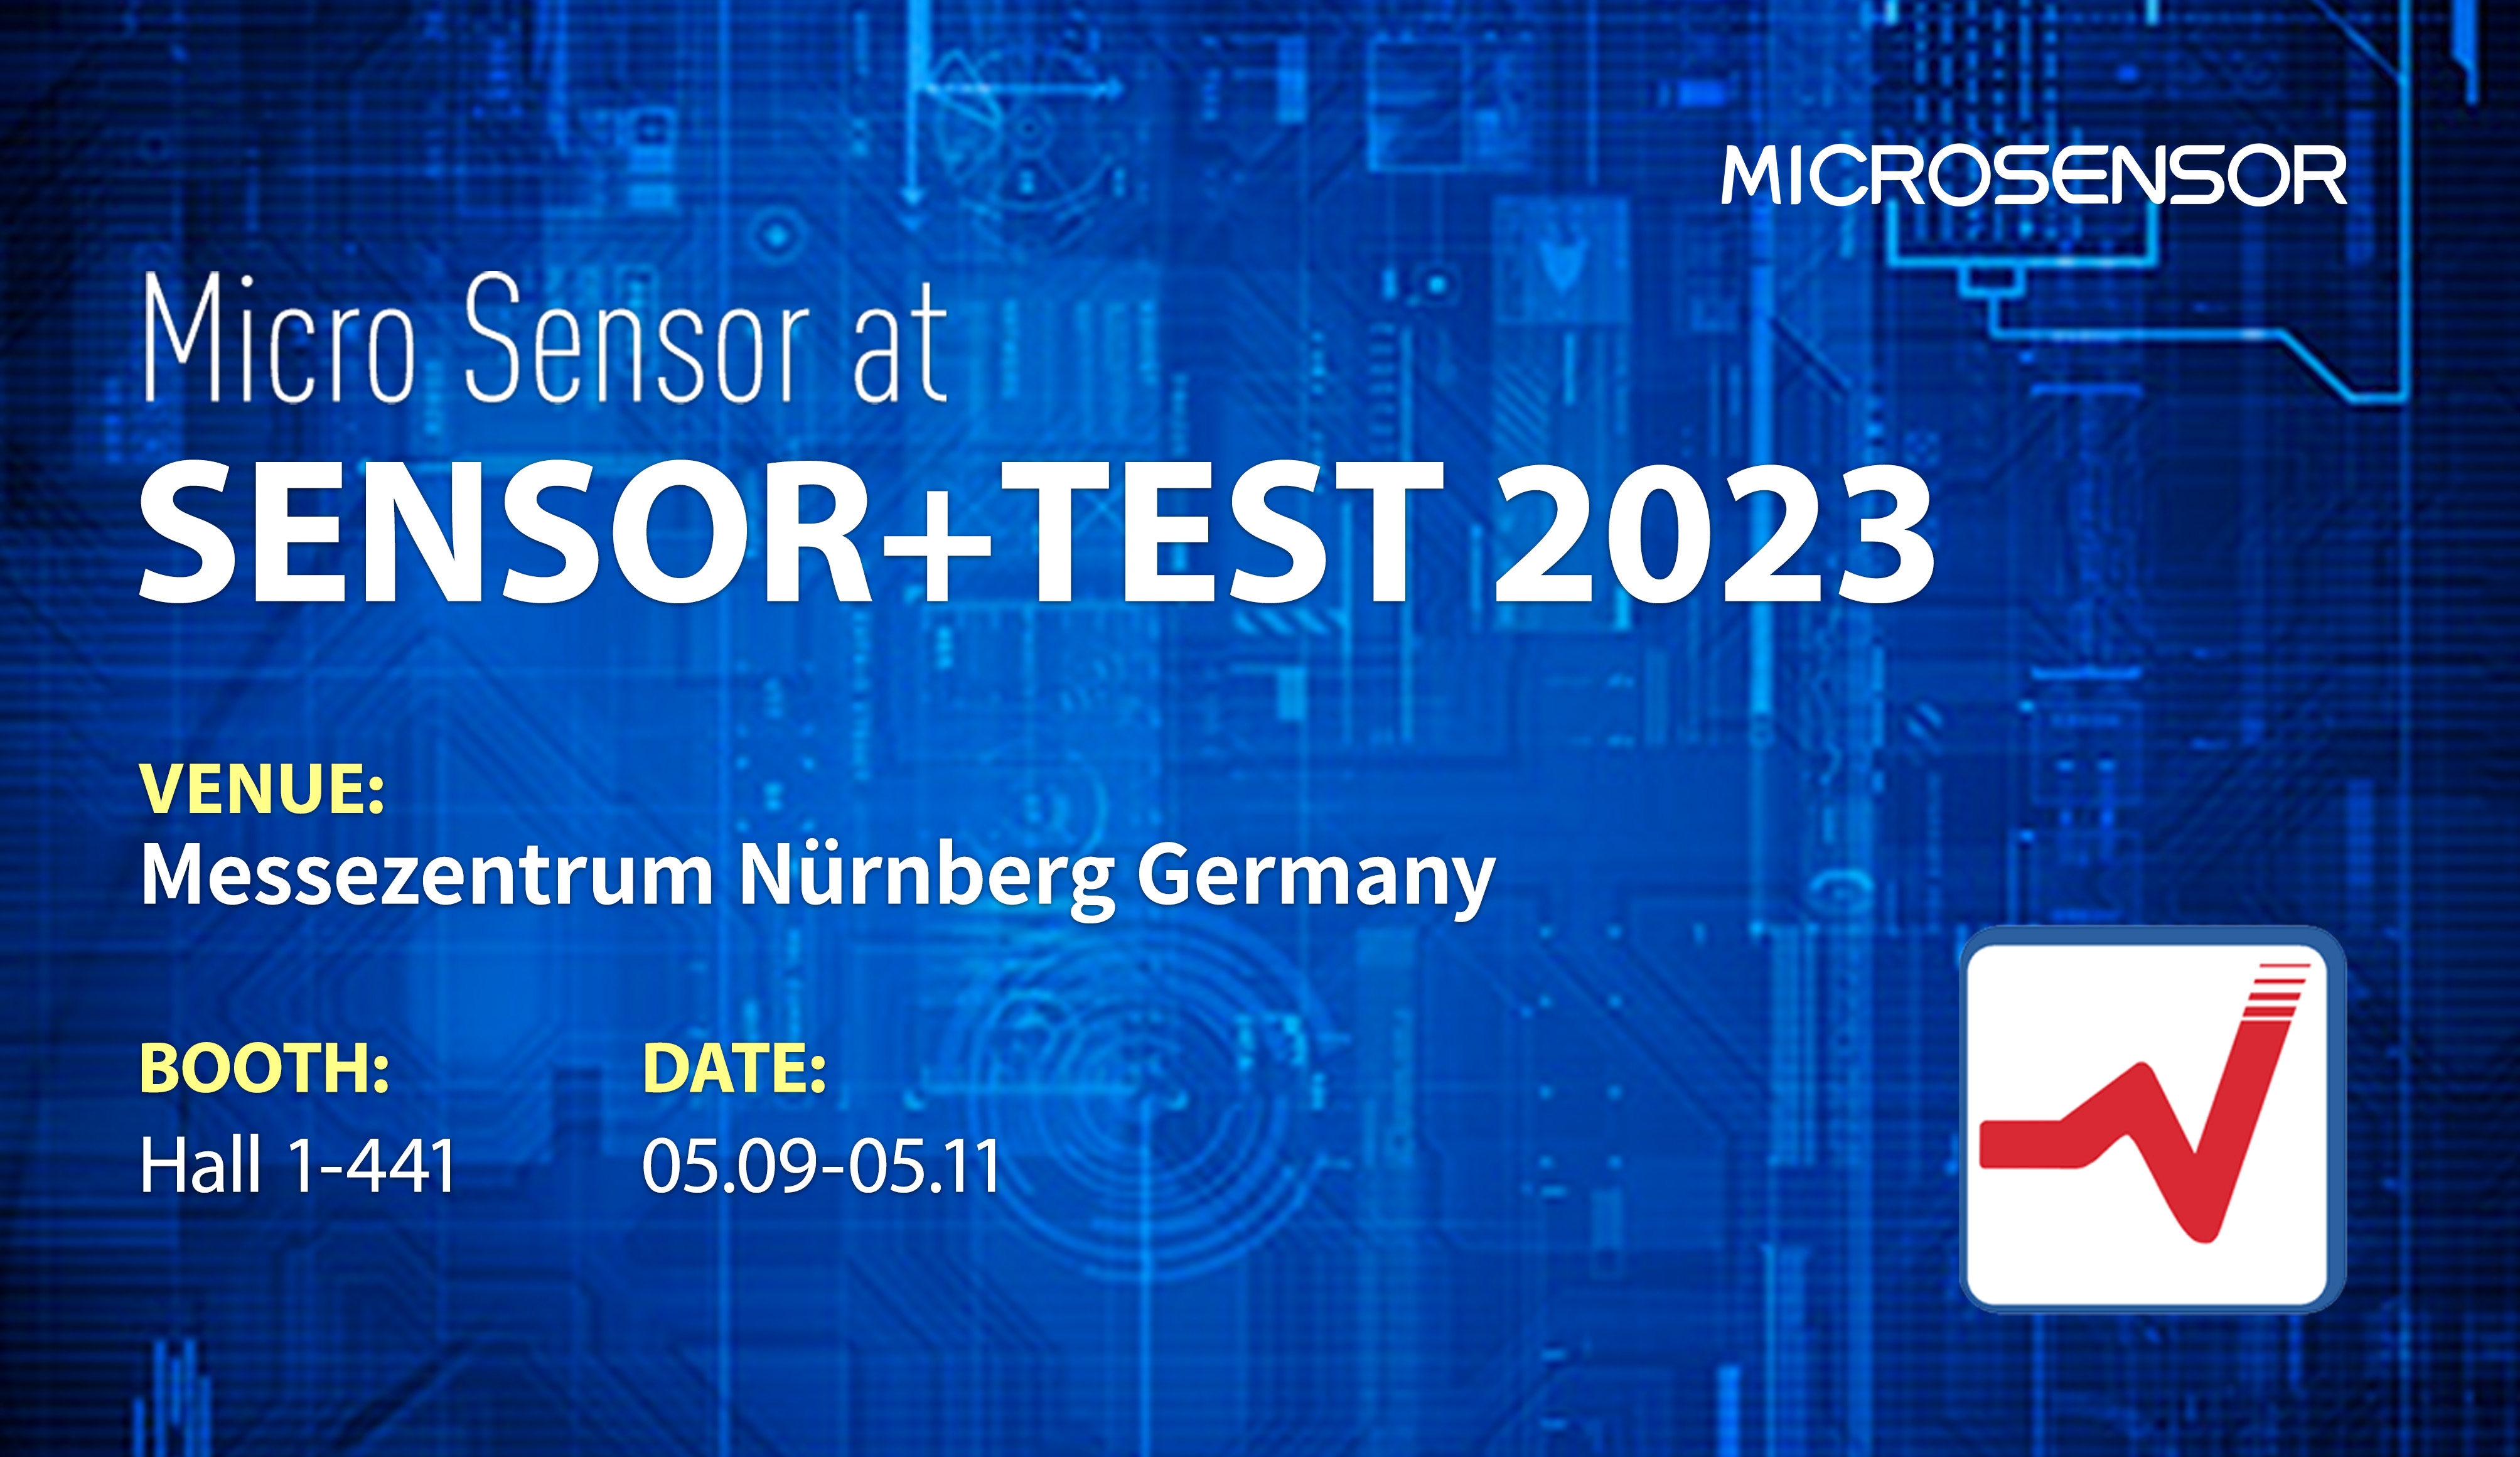 Meet Micro Sensor at SENSOR + TEST 2023